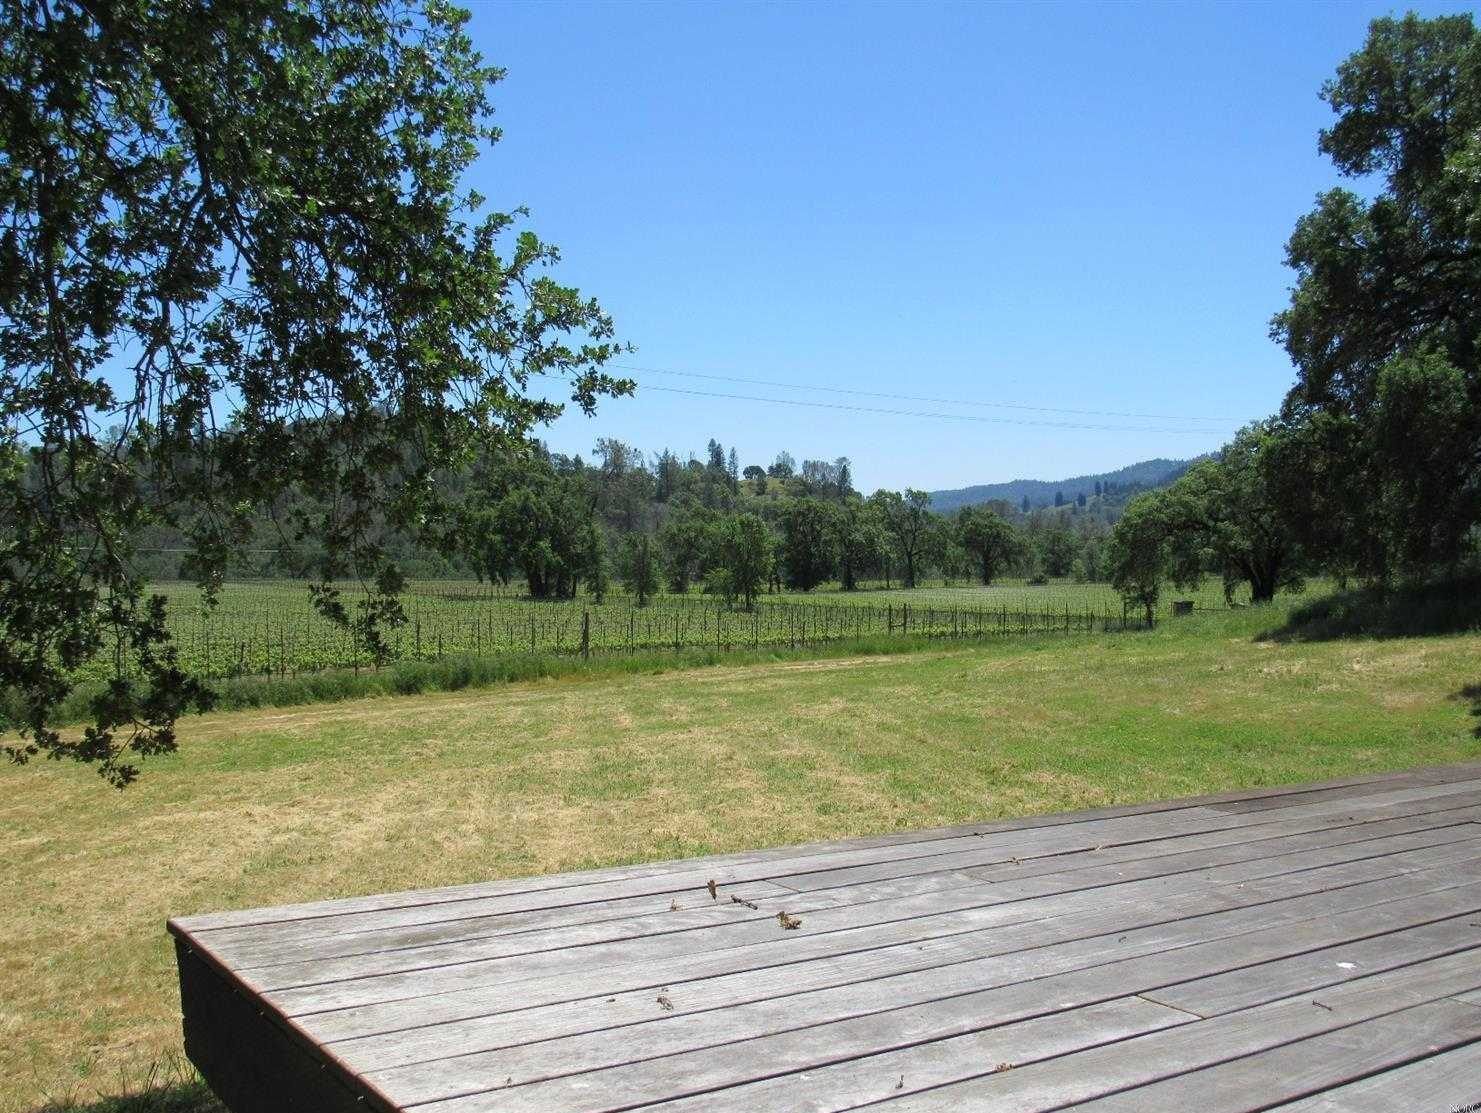 empty deck with vineyard in distance